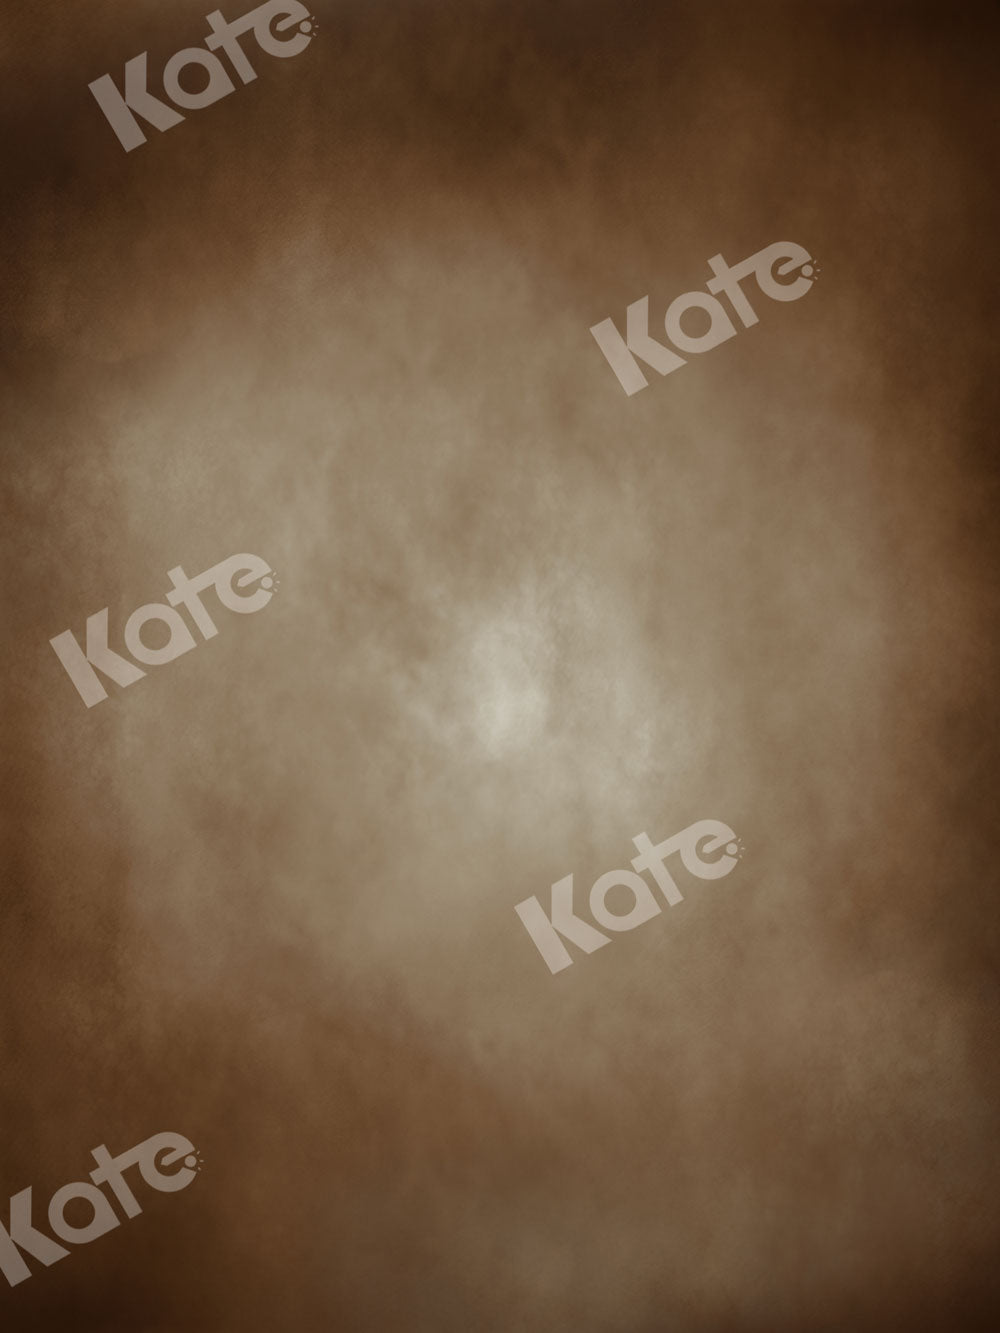 Kate 抽象的な茶色の肖像写真の背景